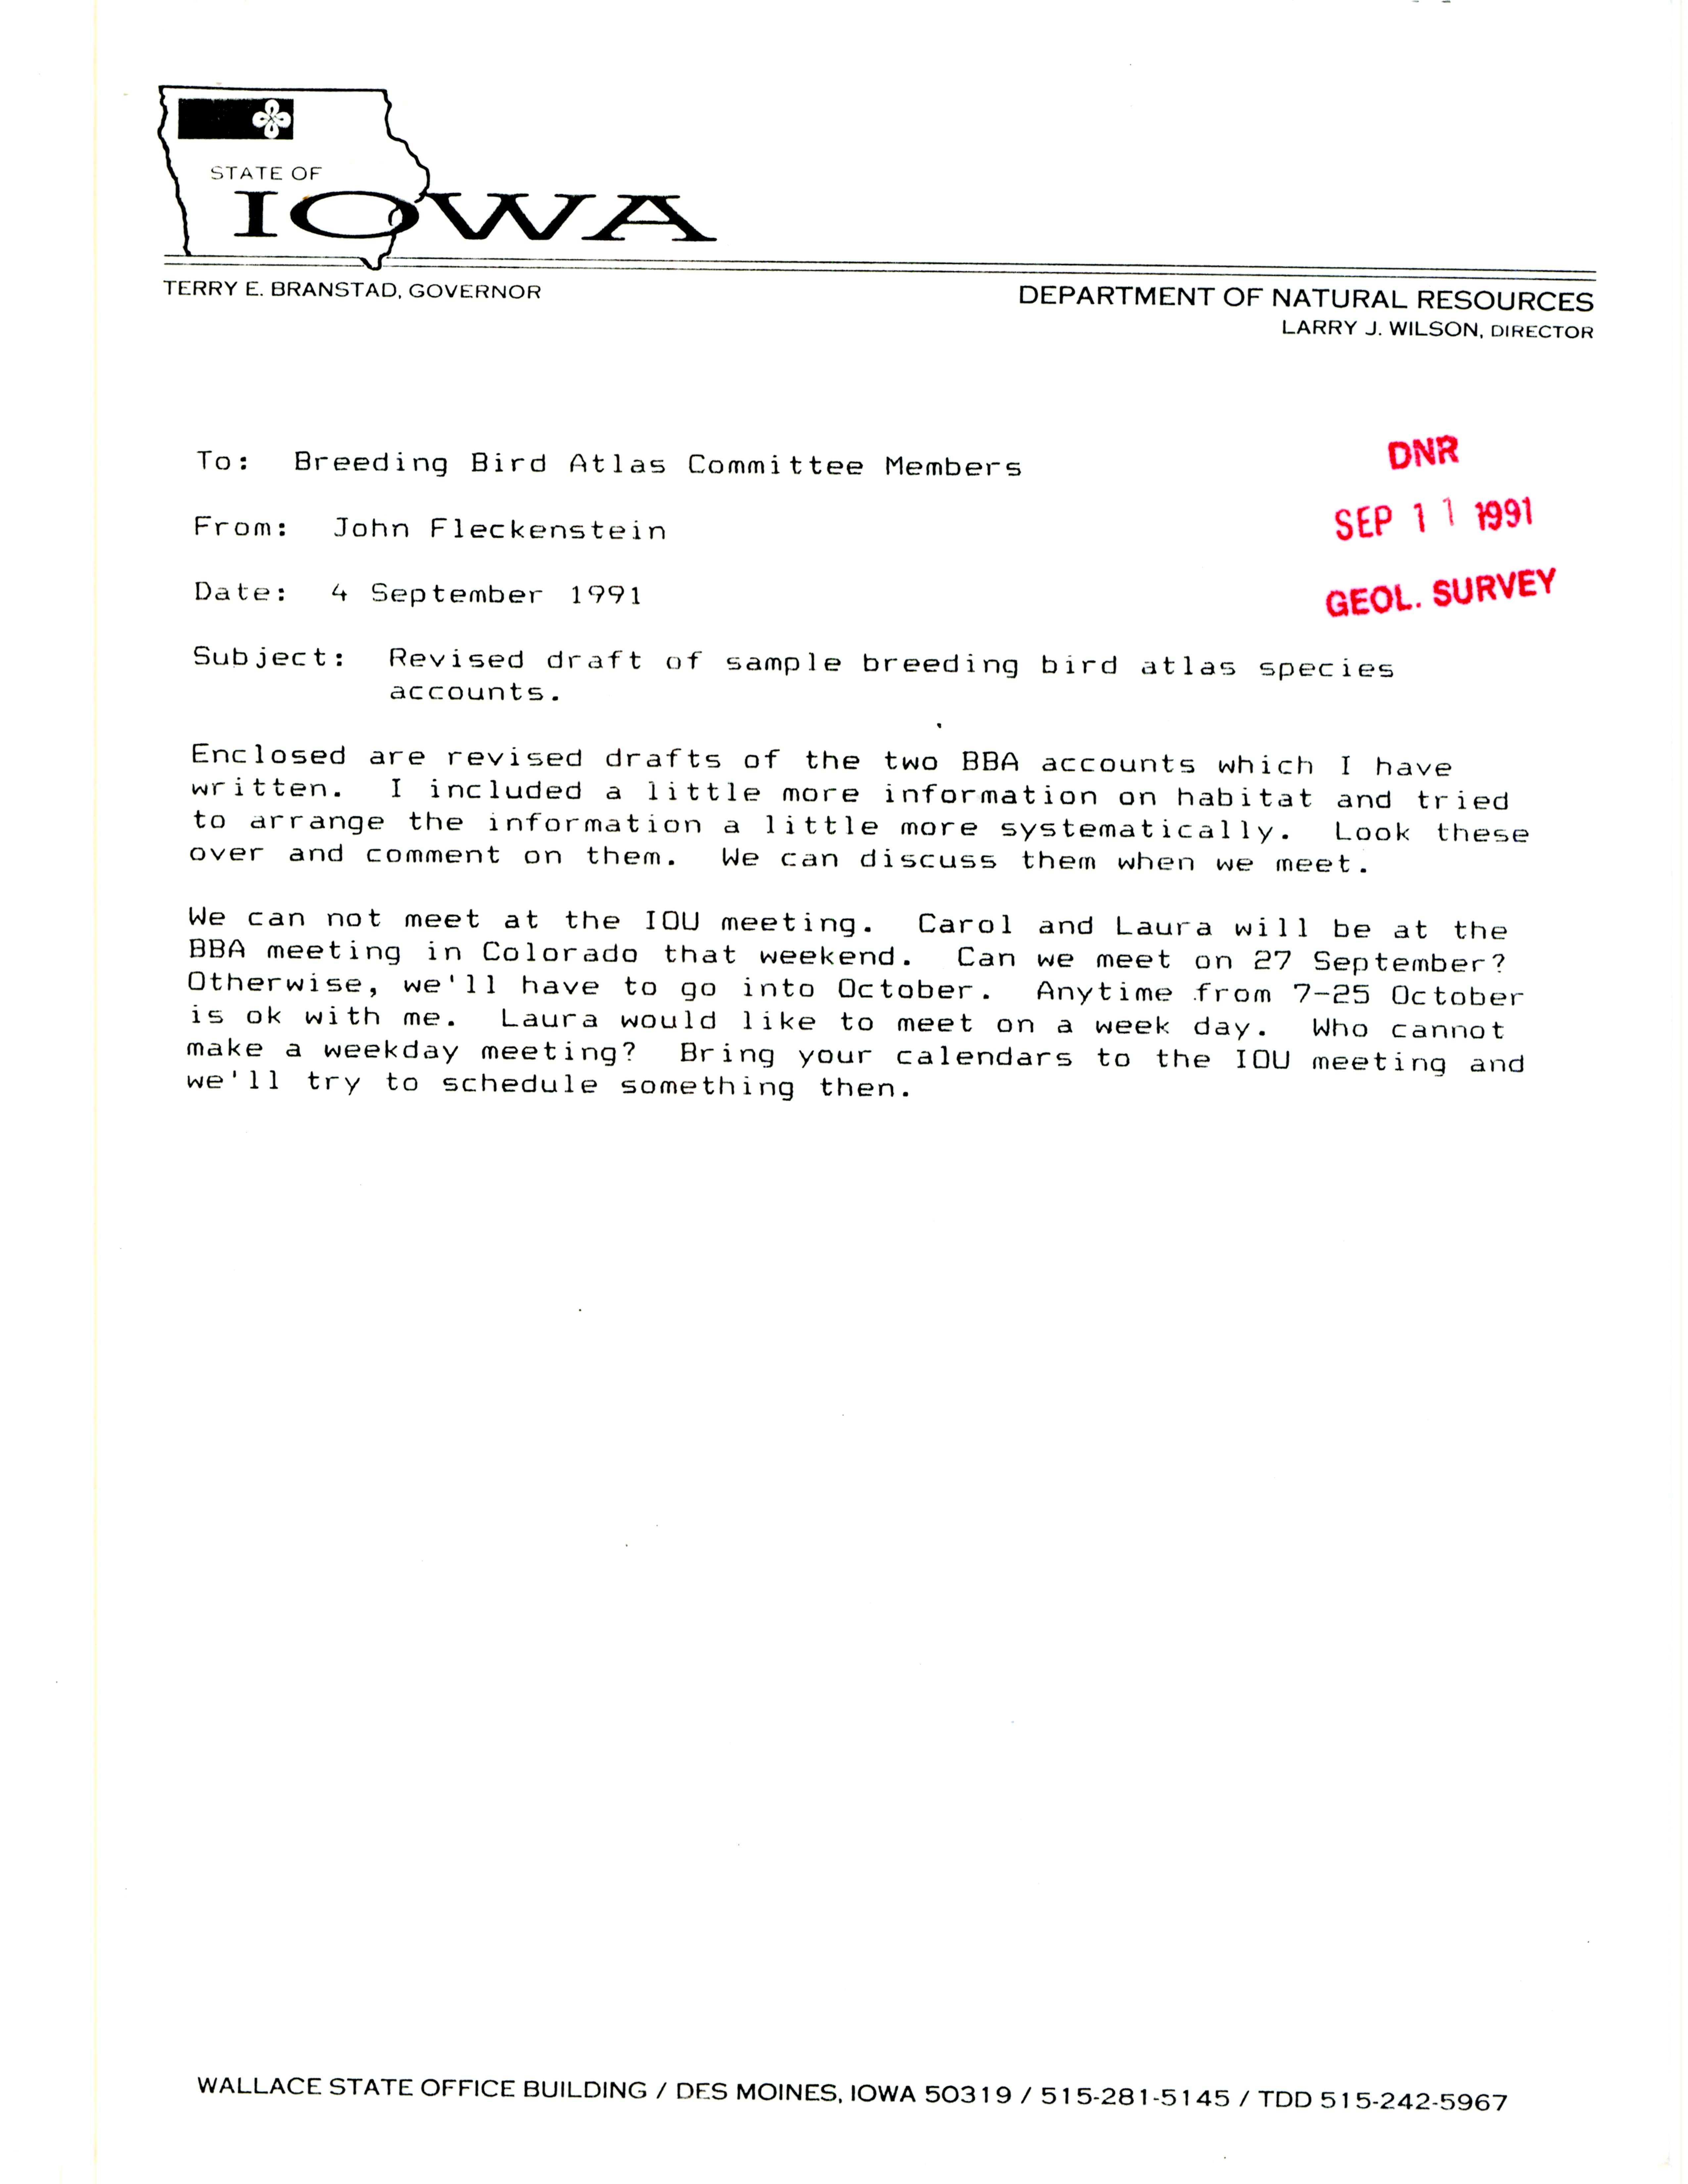 John Fleckenstein letter to the Breeding Bird Atlas Committee members regarding the project, September 4, 1991